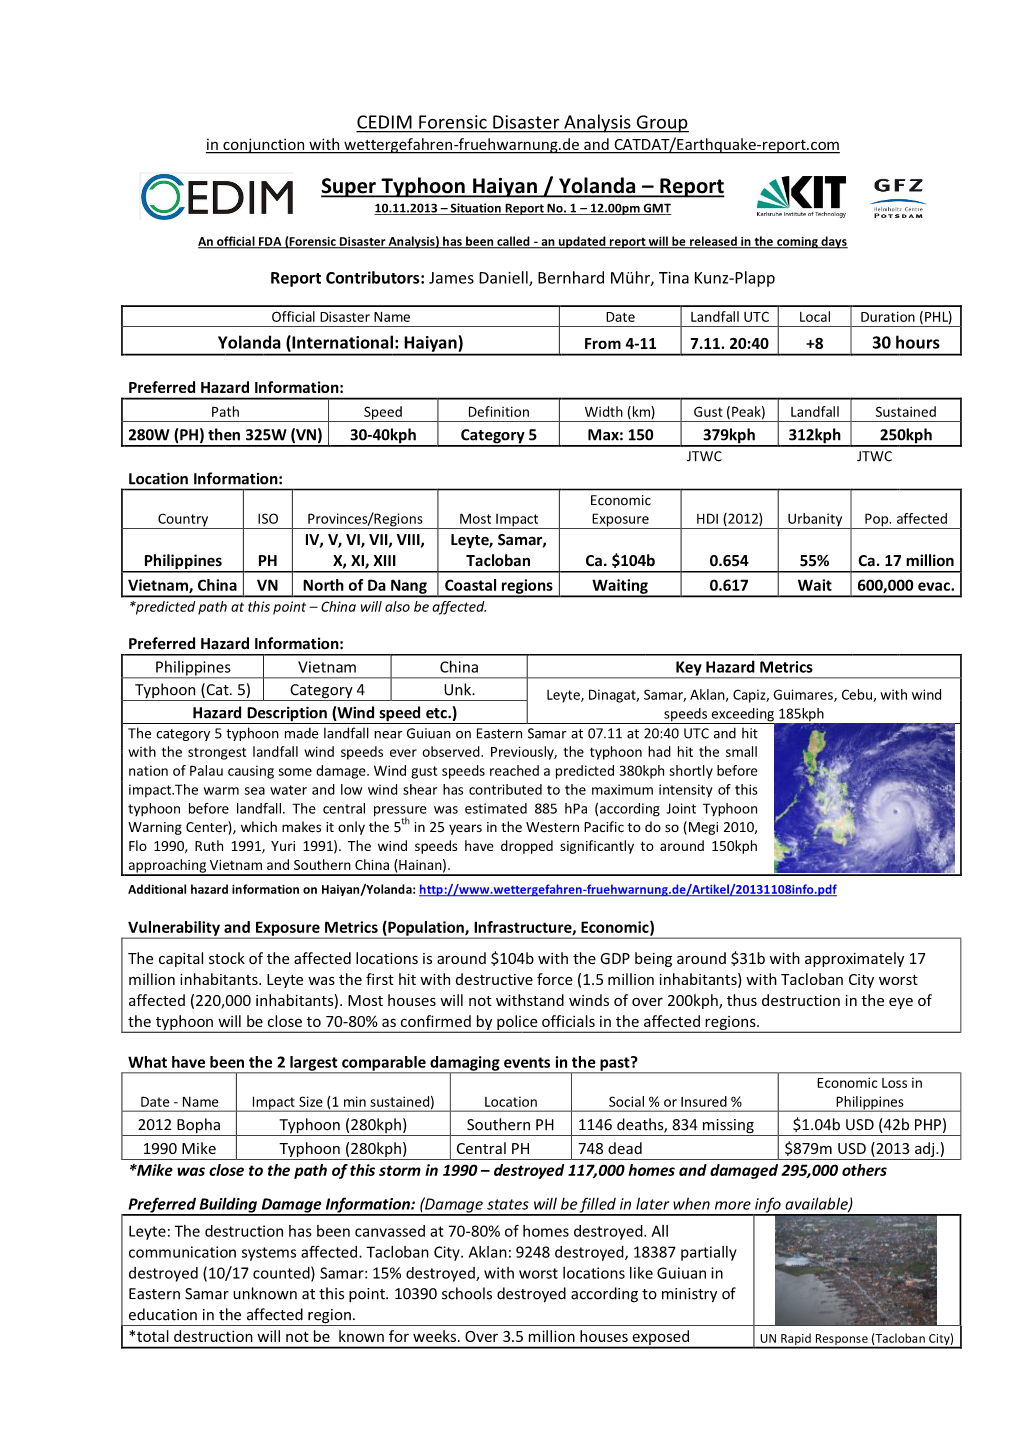 Super Typhoon Haiyan / Yolanda – Report 10.11.2013 – Situation Report No